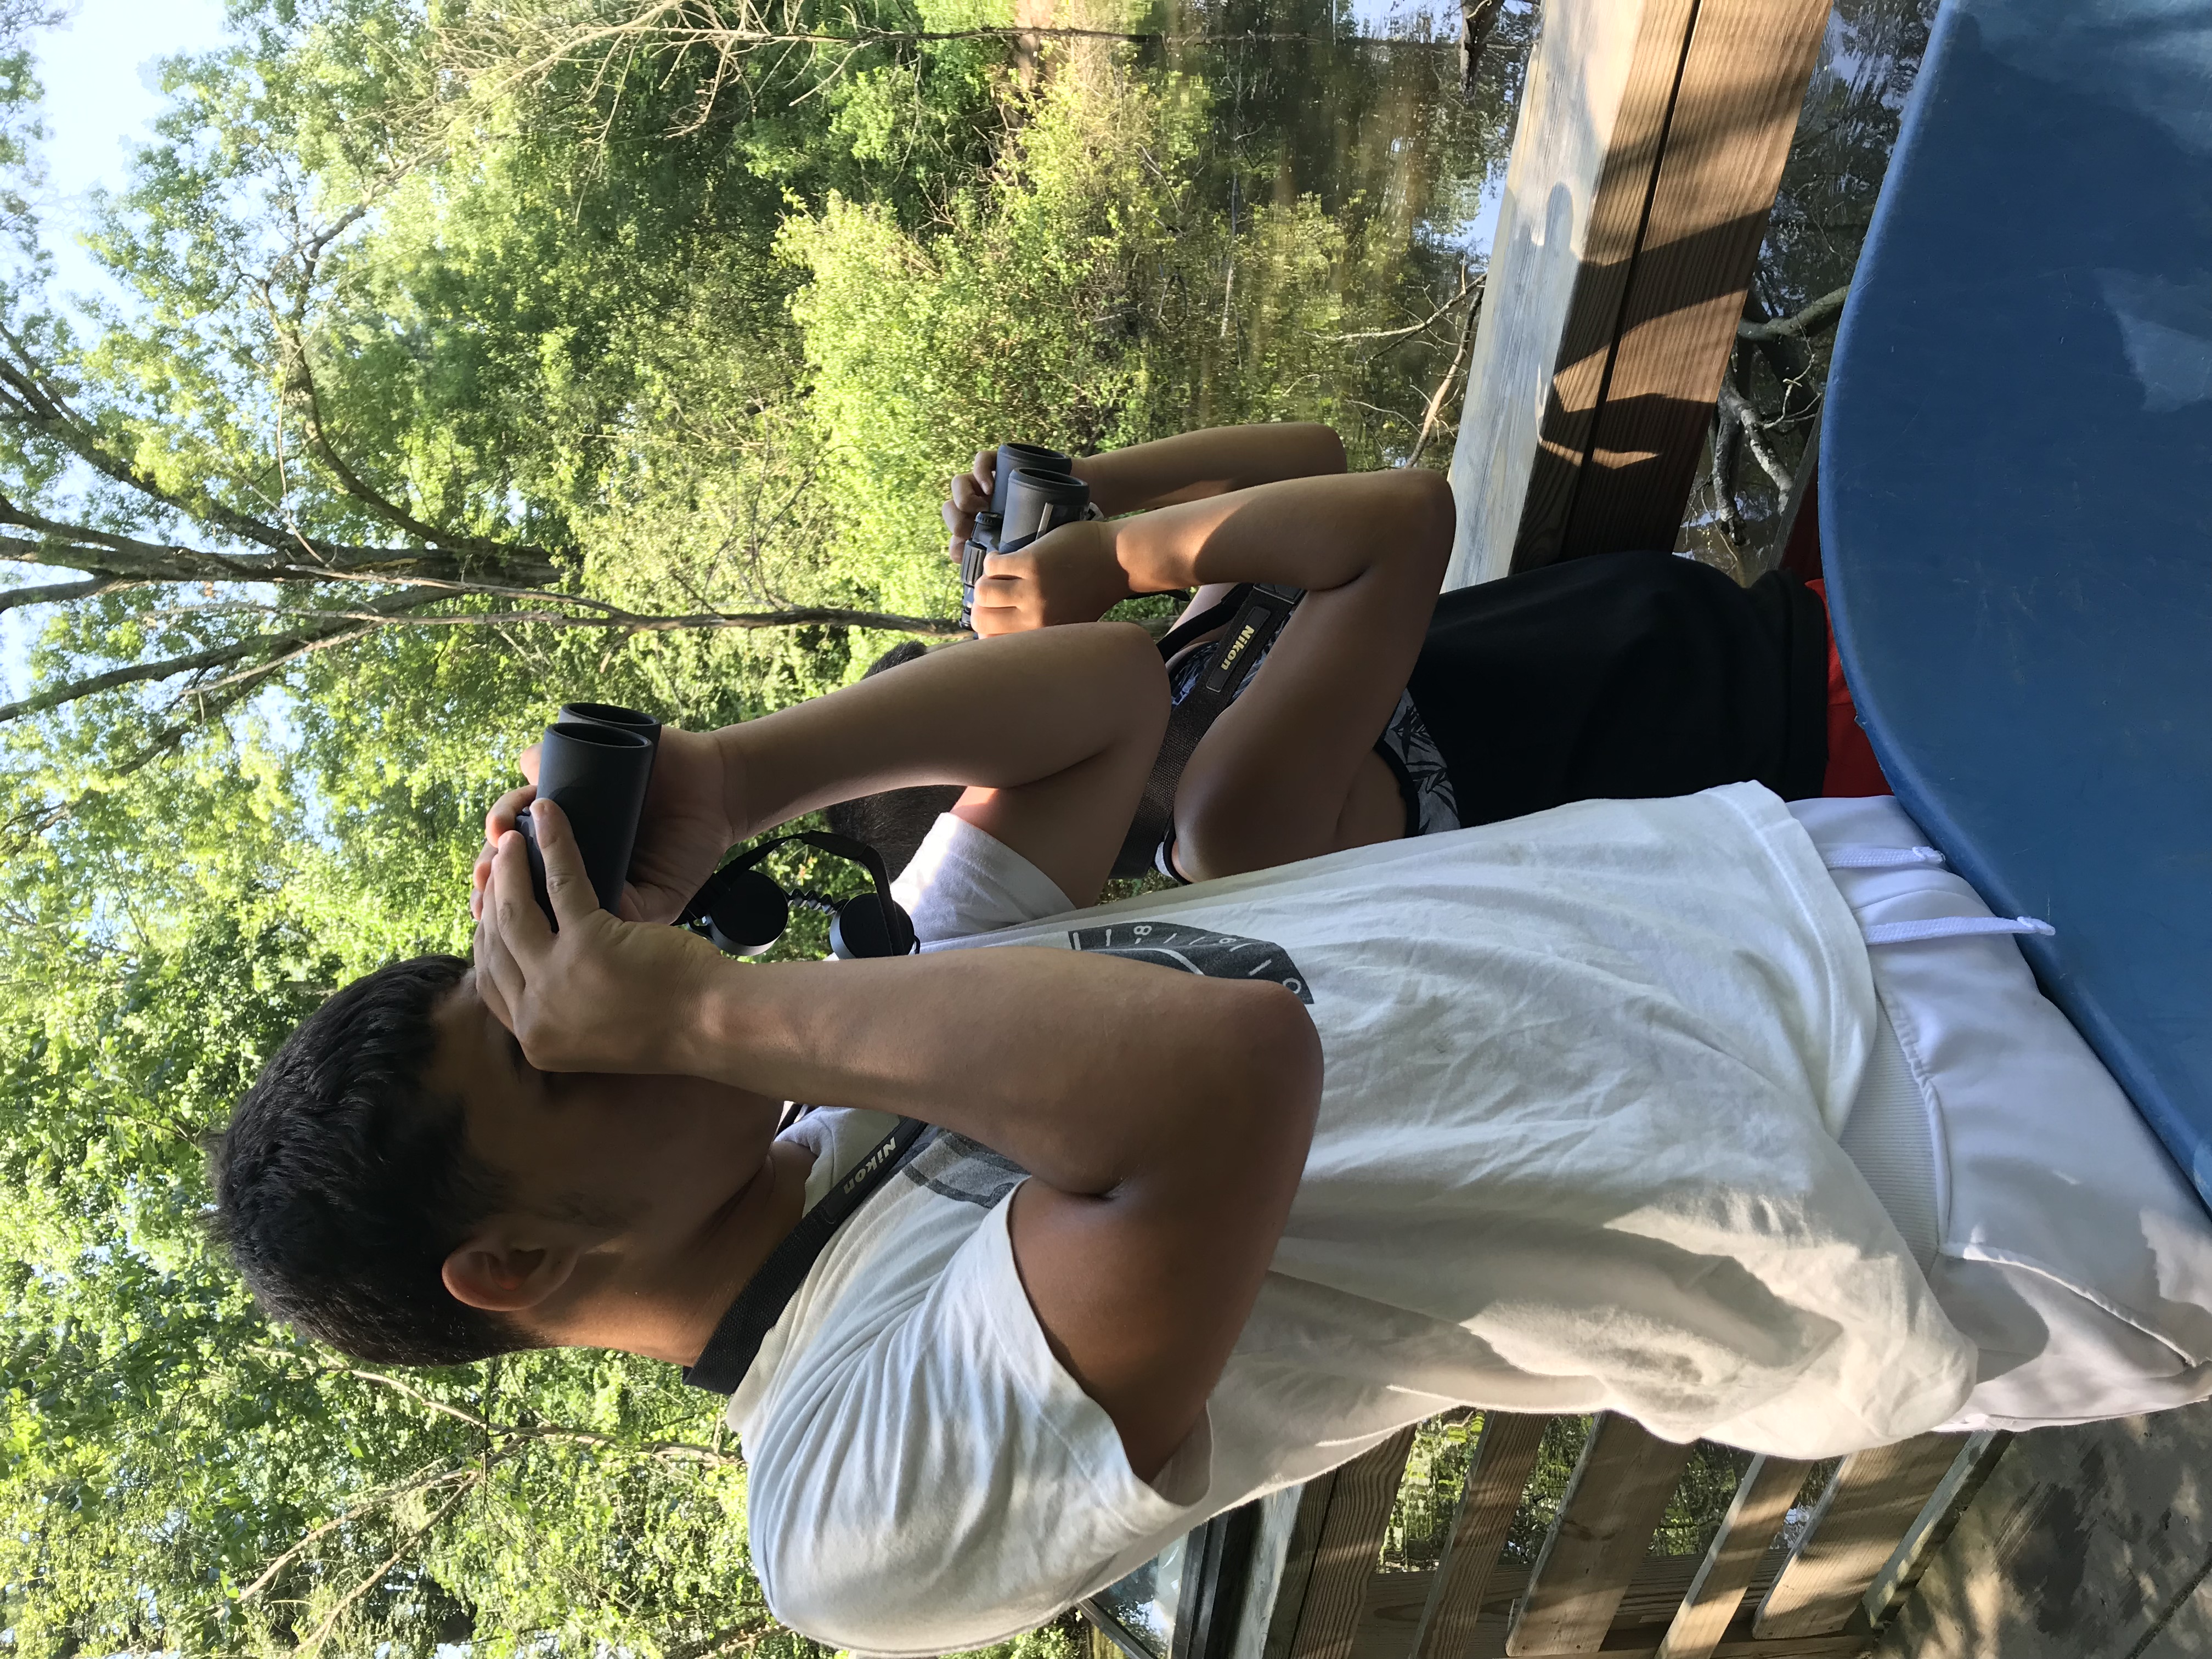 Looking through binoculars at Fort River